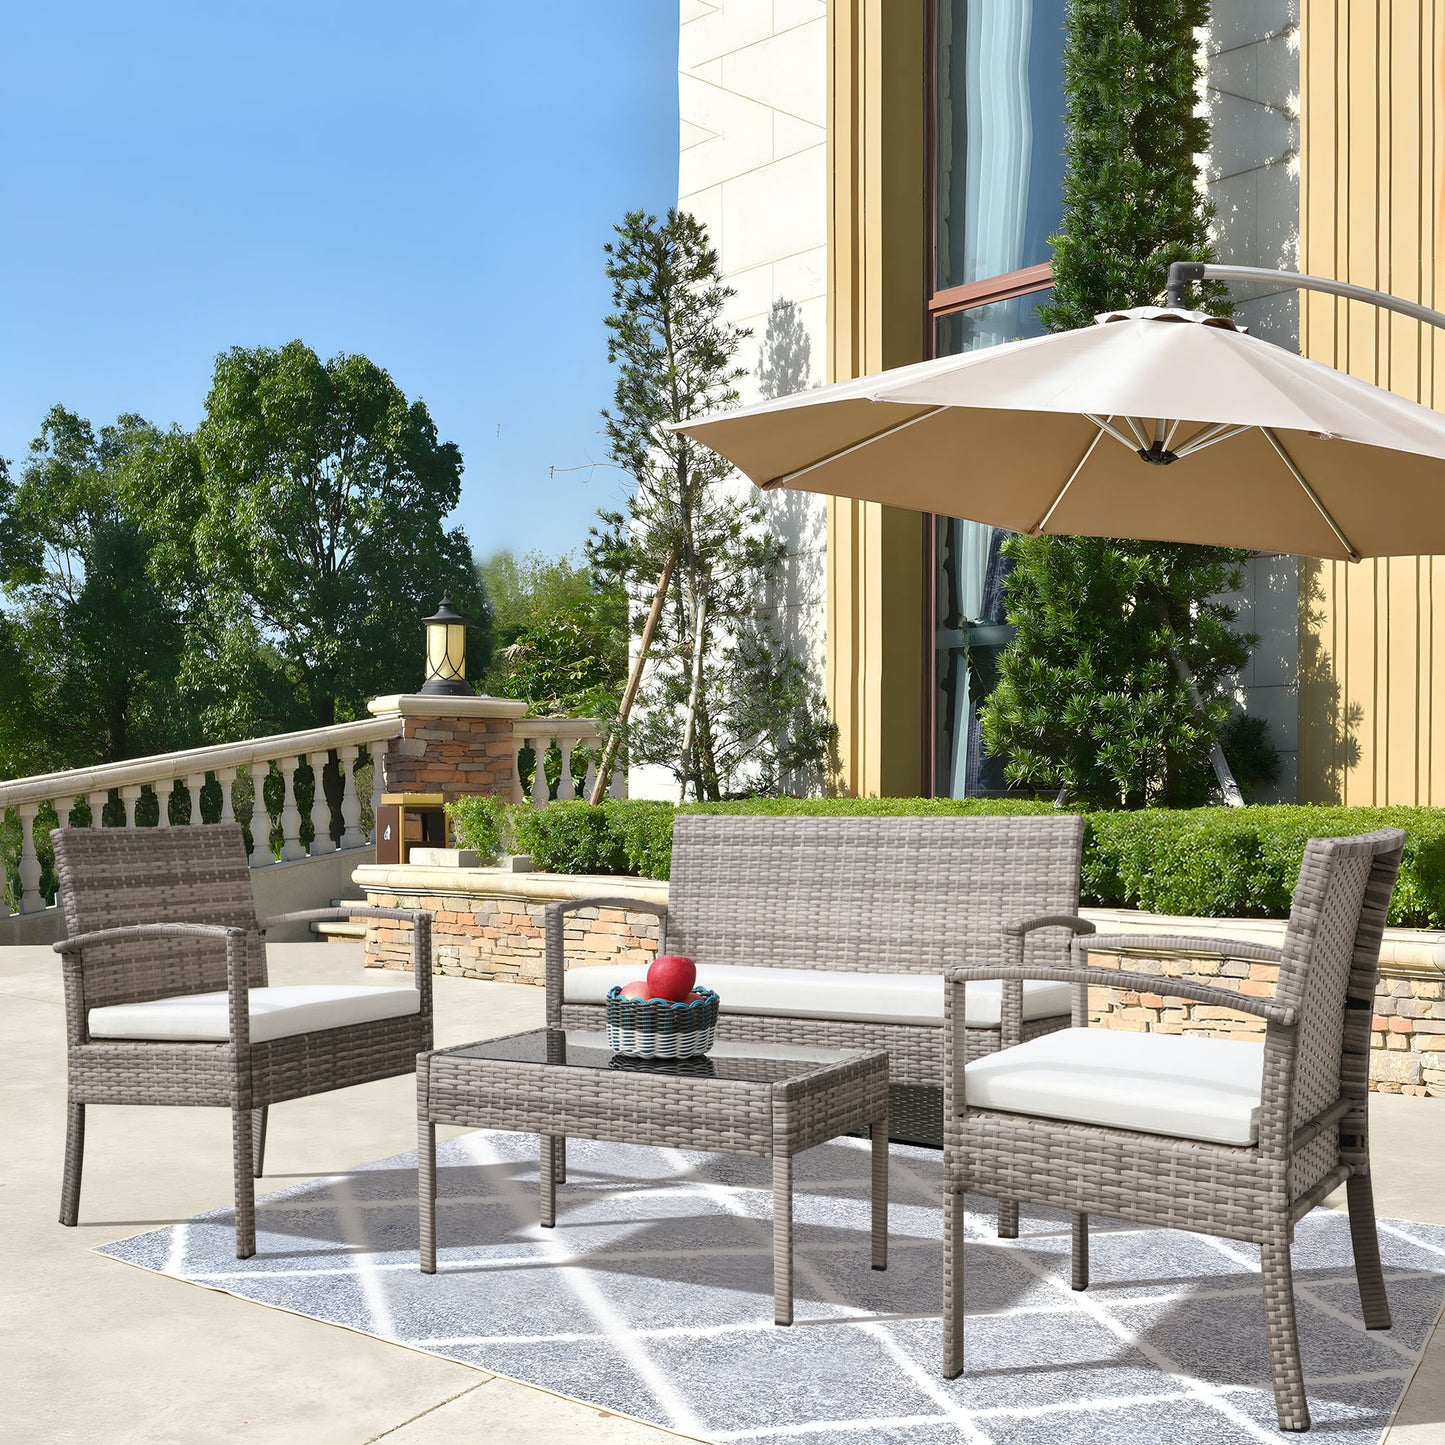 4 pieces outdoor rattan sofa patio furniture set gray